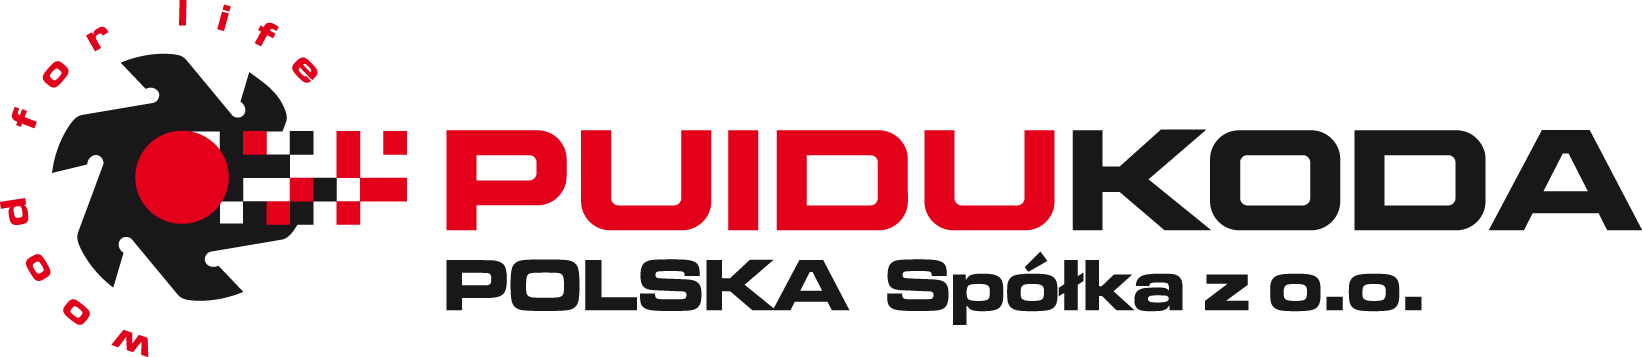 puidukoda_polska_logo_v9